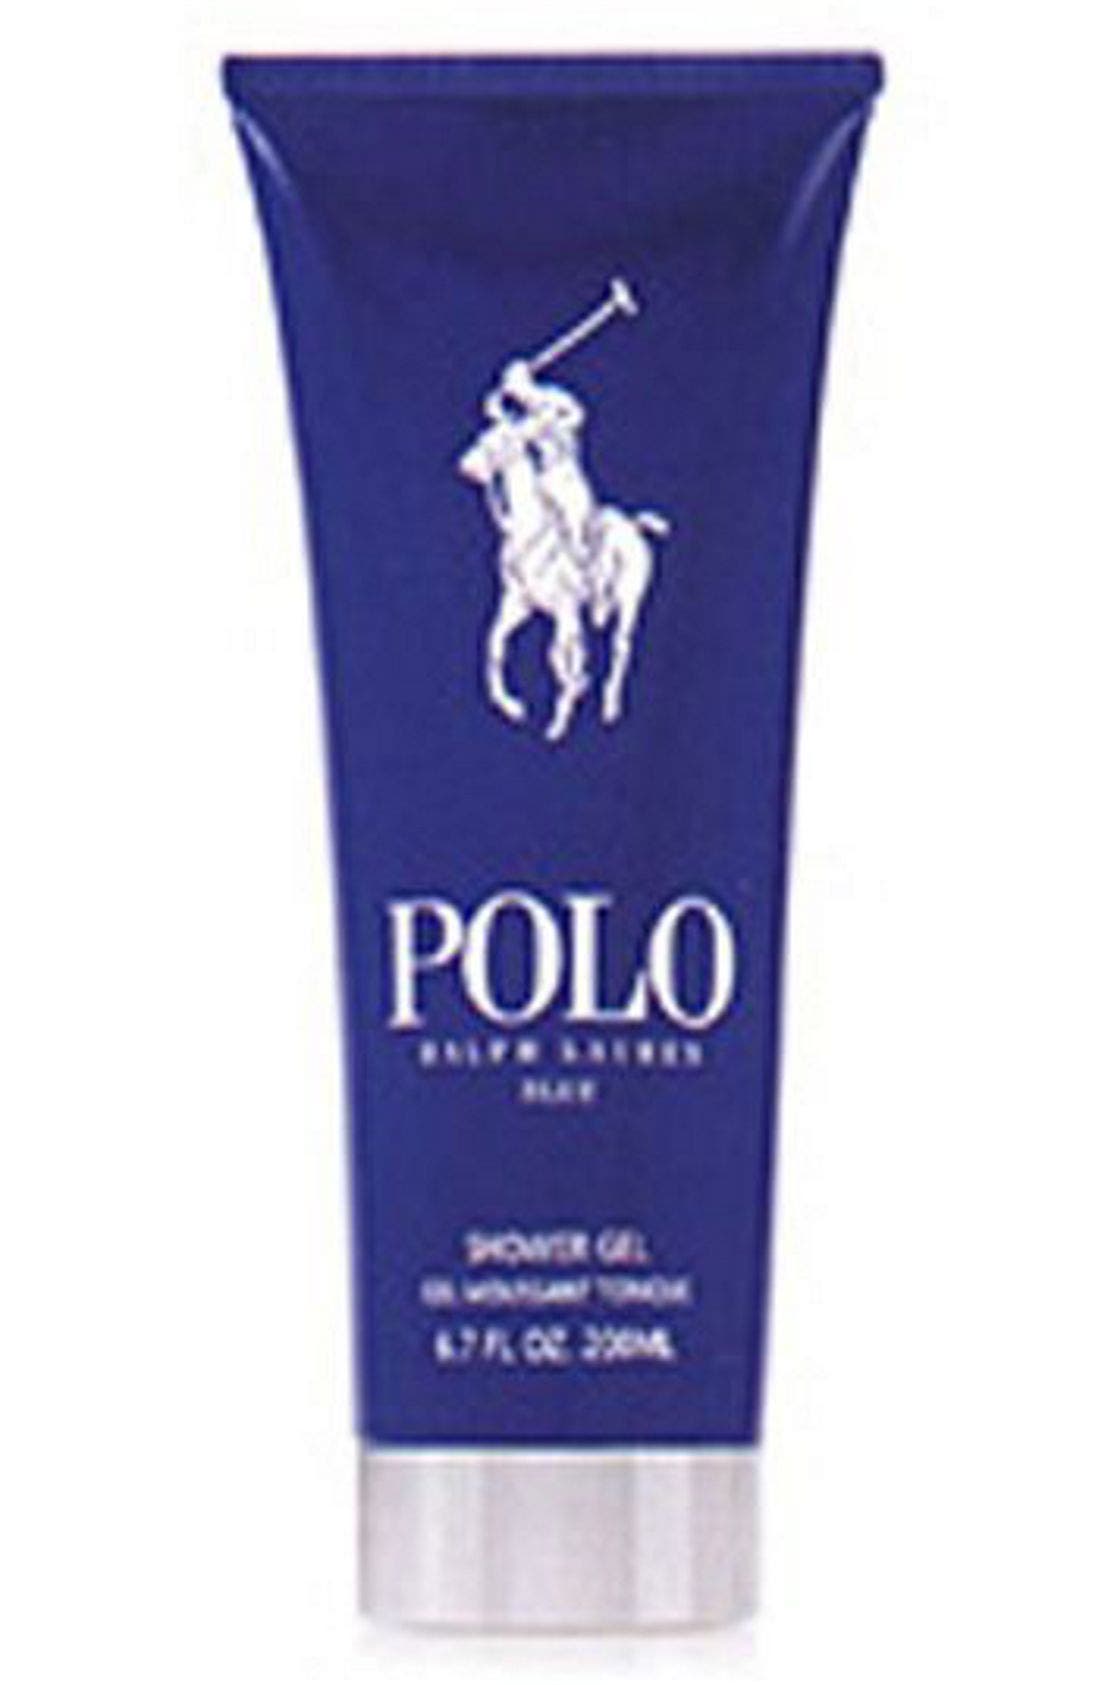 polo blue shower gel